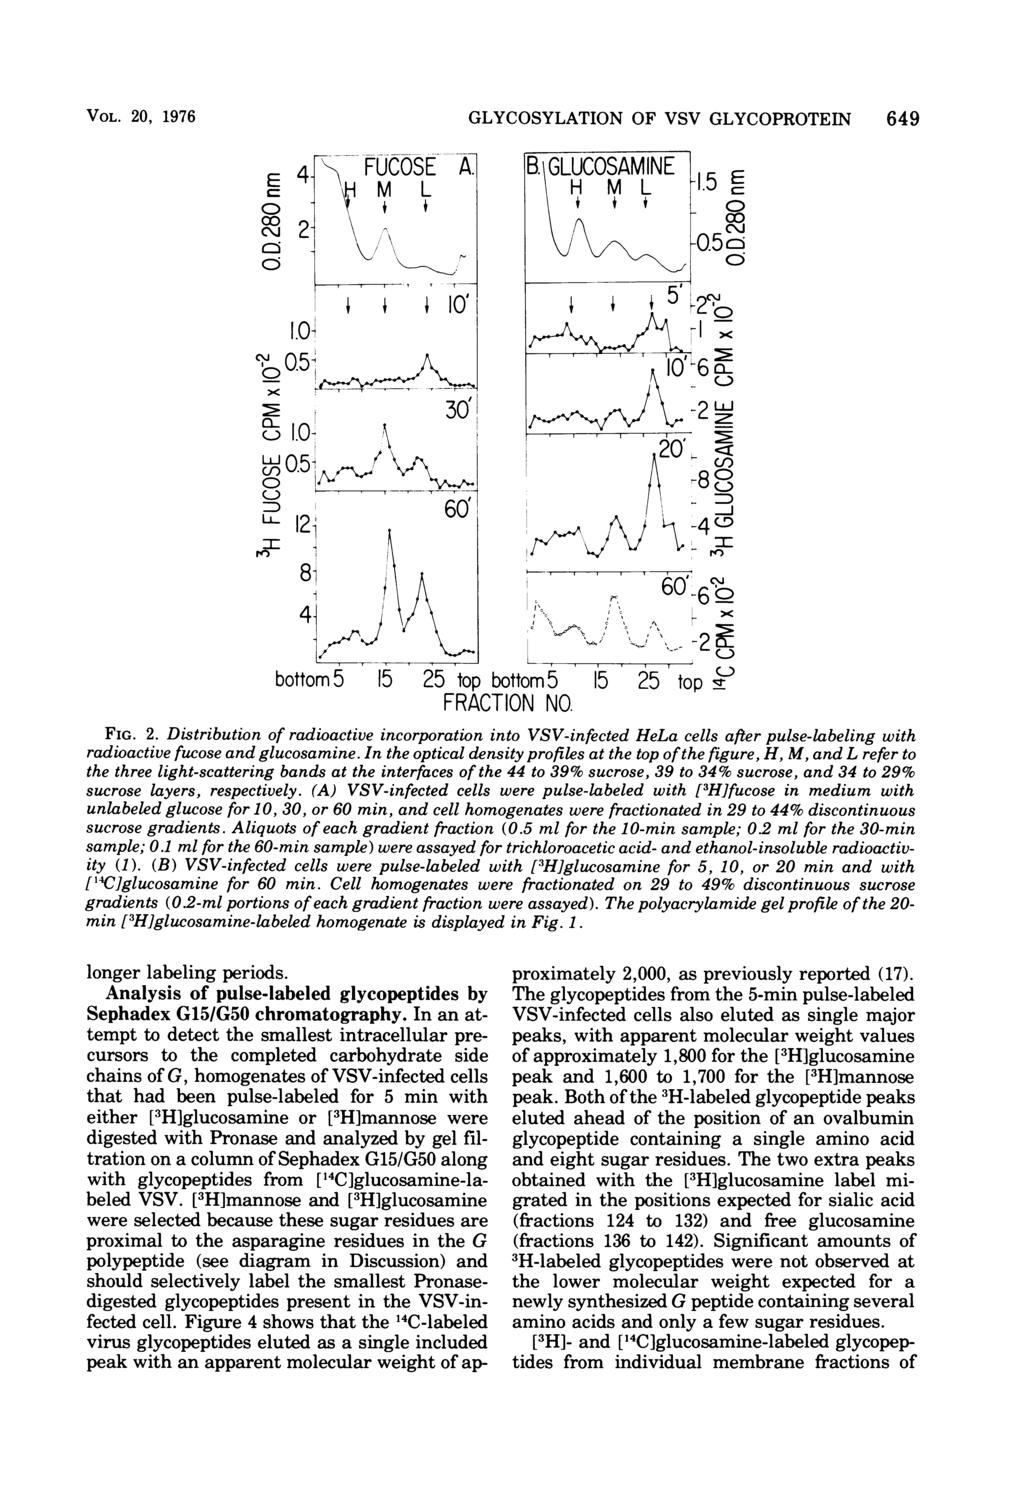 VOL. 20, 1976 E CD 00 co C\J 0 4- f FUCOSE A. H M L i i 2-0.51 GLYCOSYLATION OF VSV GLYCOPROTEIN 649 B. GLUCOSAMINE H M L i -1.5 E co -05ci j 5 2"-2zo (1-) (CL 1.0< 30 -v u-, 0.